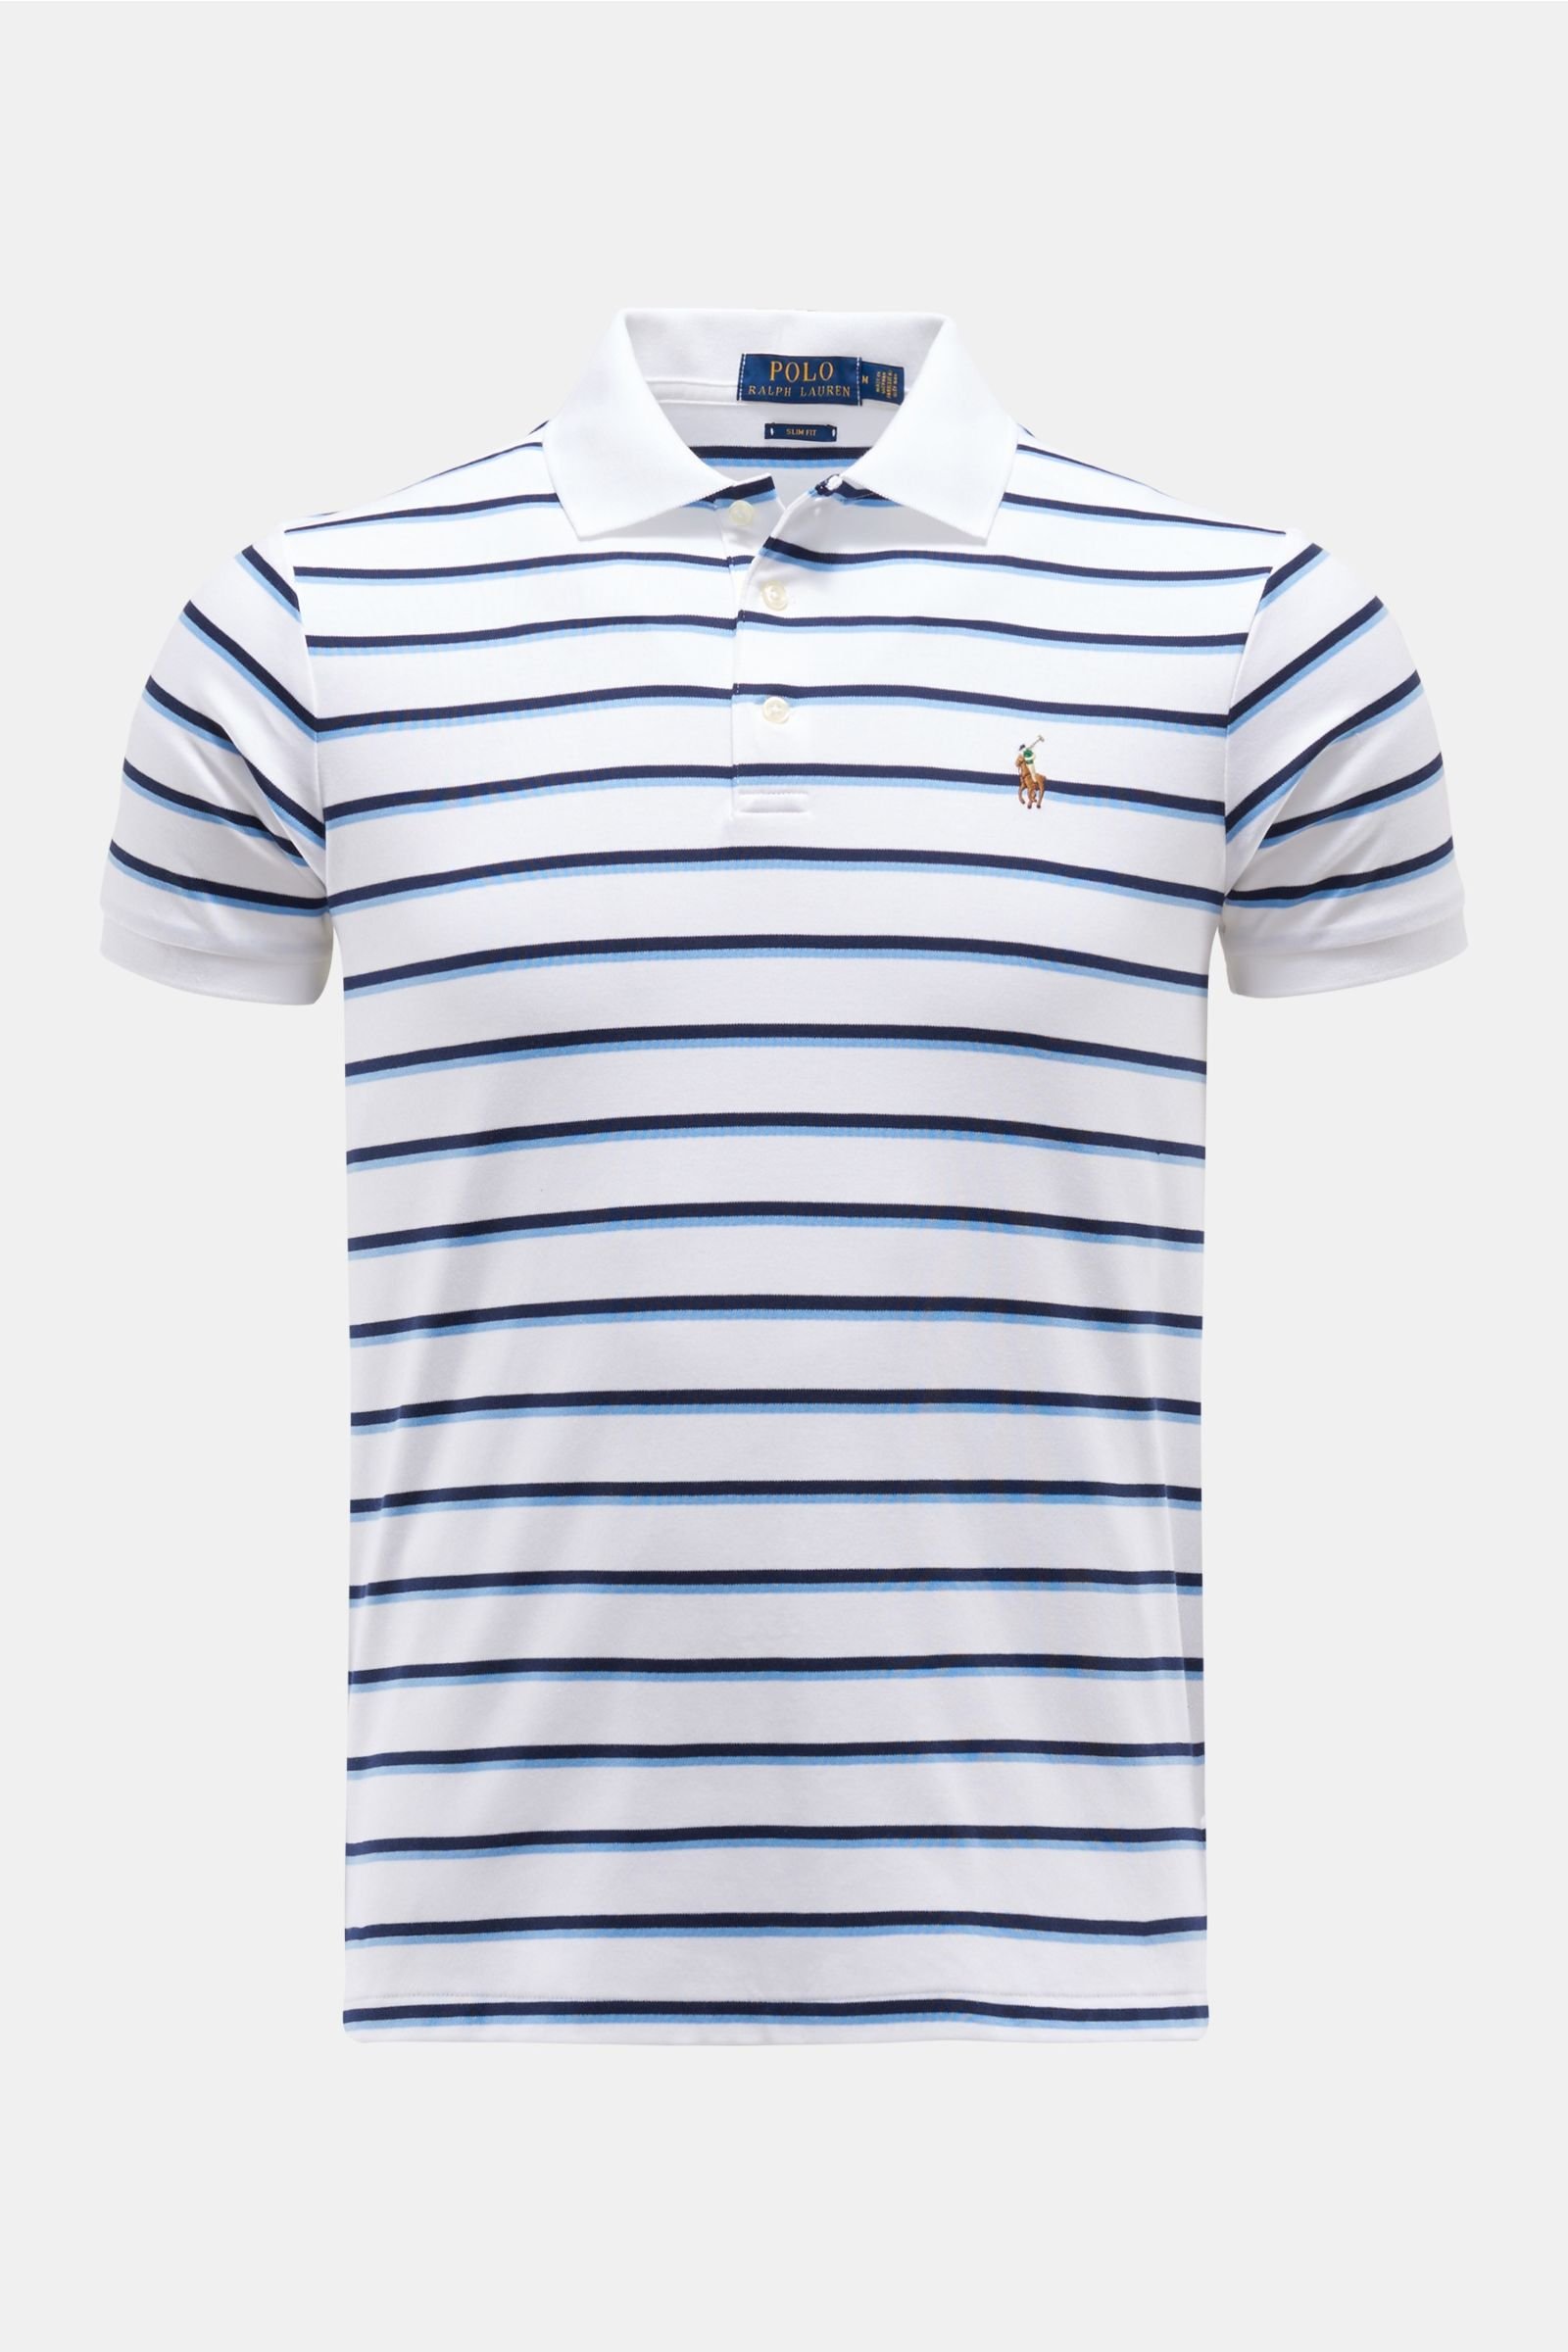 Jersey polo shirt white/navy striped